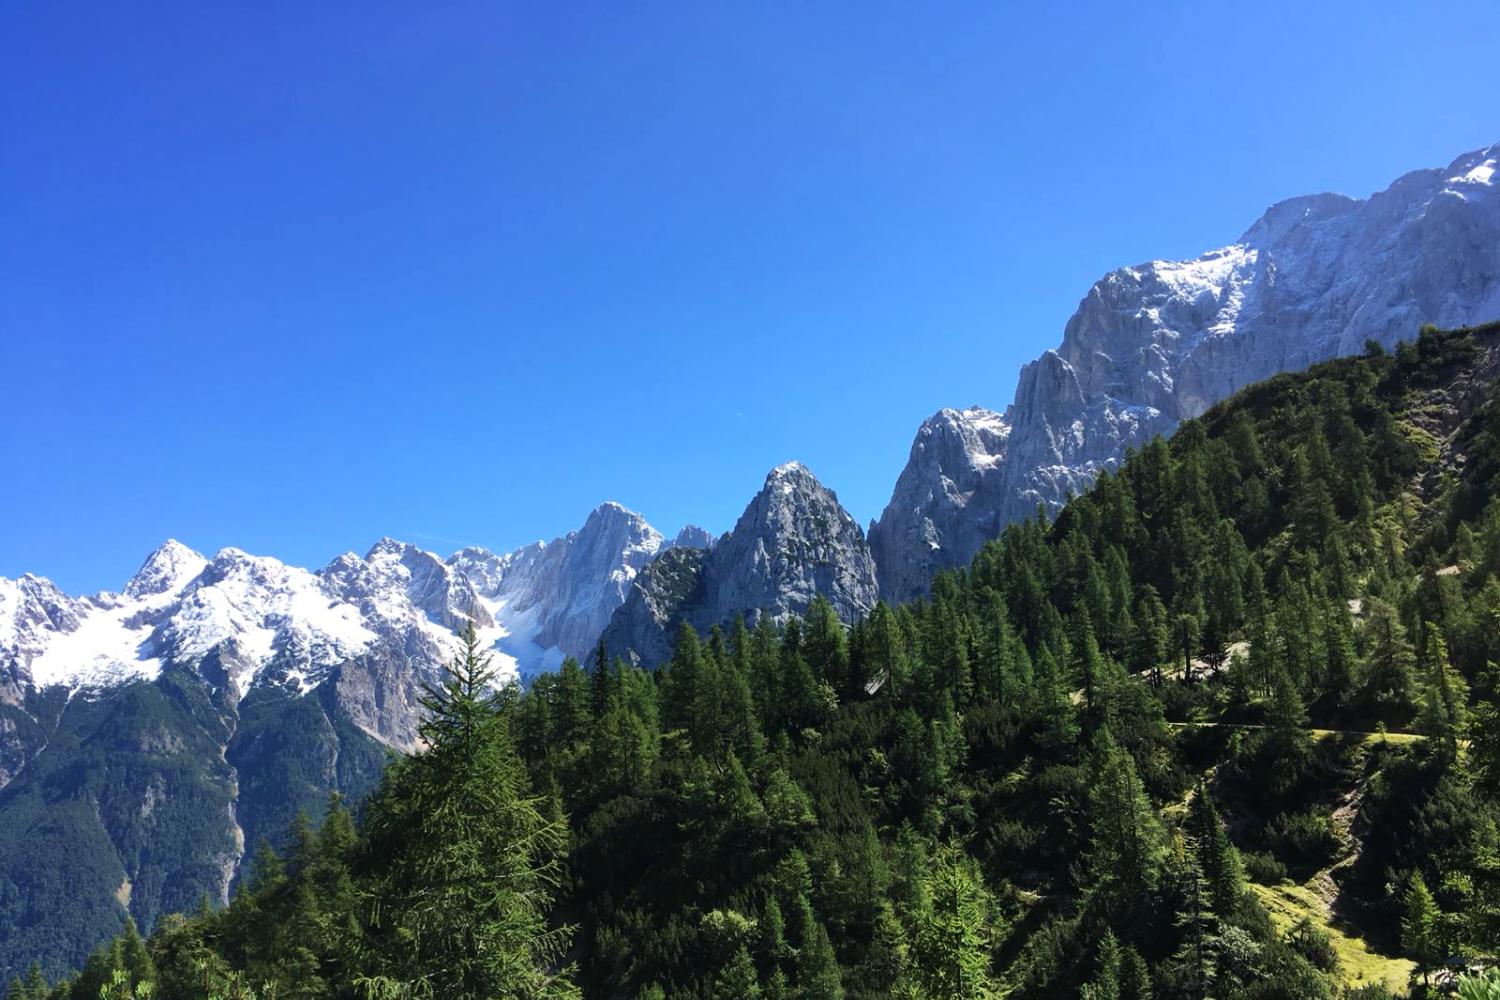 Slovenia Multisport Adventure, hiking tour in the Alps